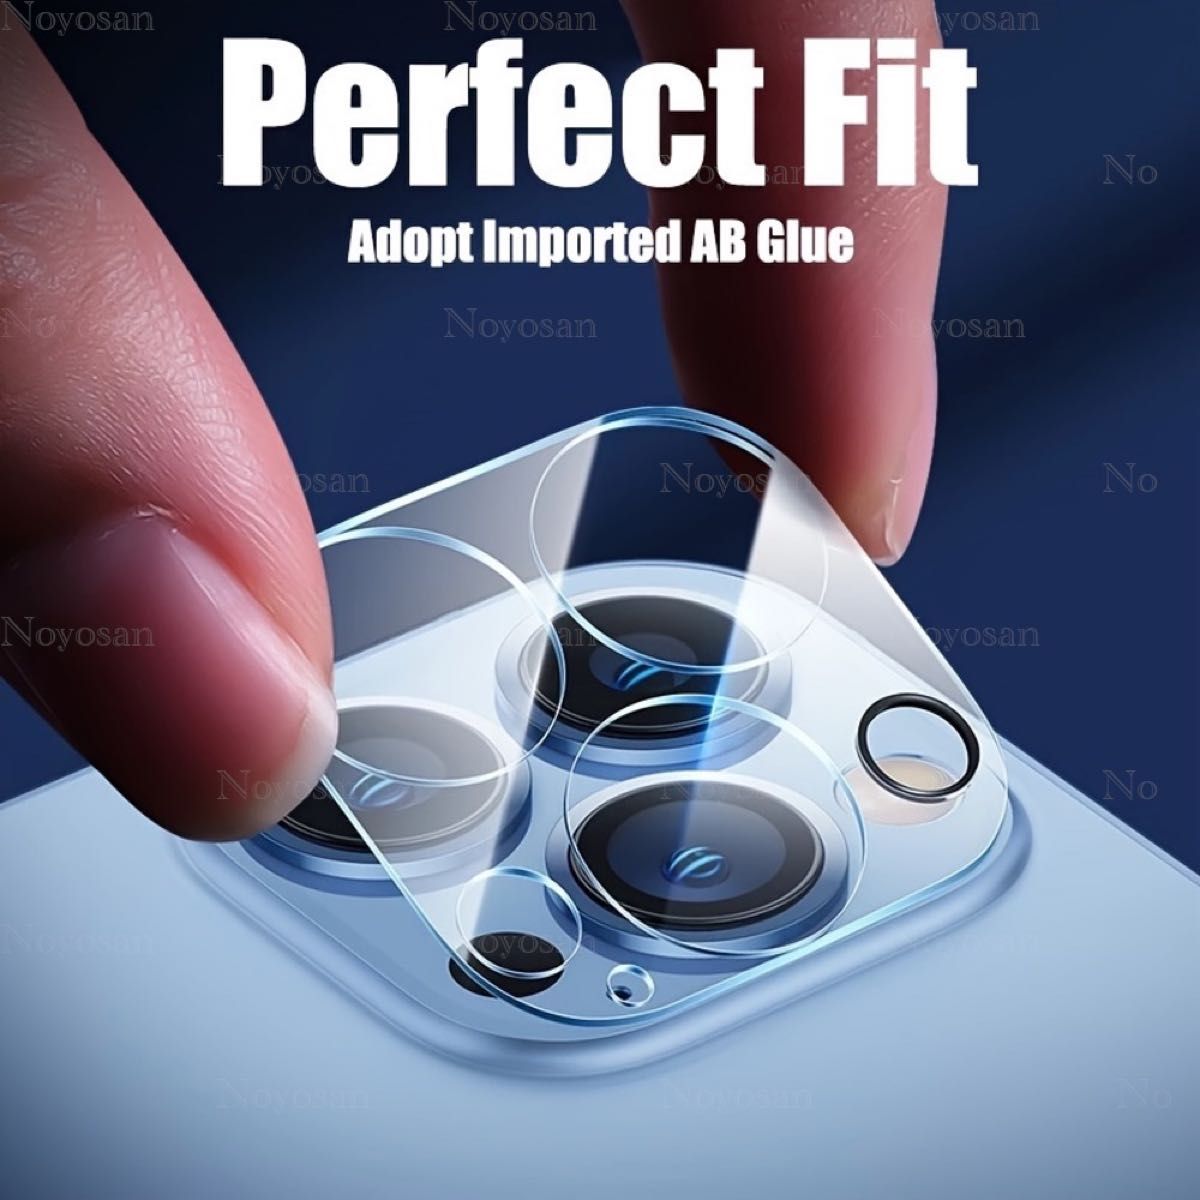 iPhone15ProMax対応 ブルーライトカット全面保護強化ガラスフィルム&背面カメラレンズ用透明強化ガラスフィルムセット